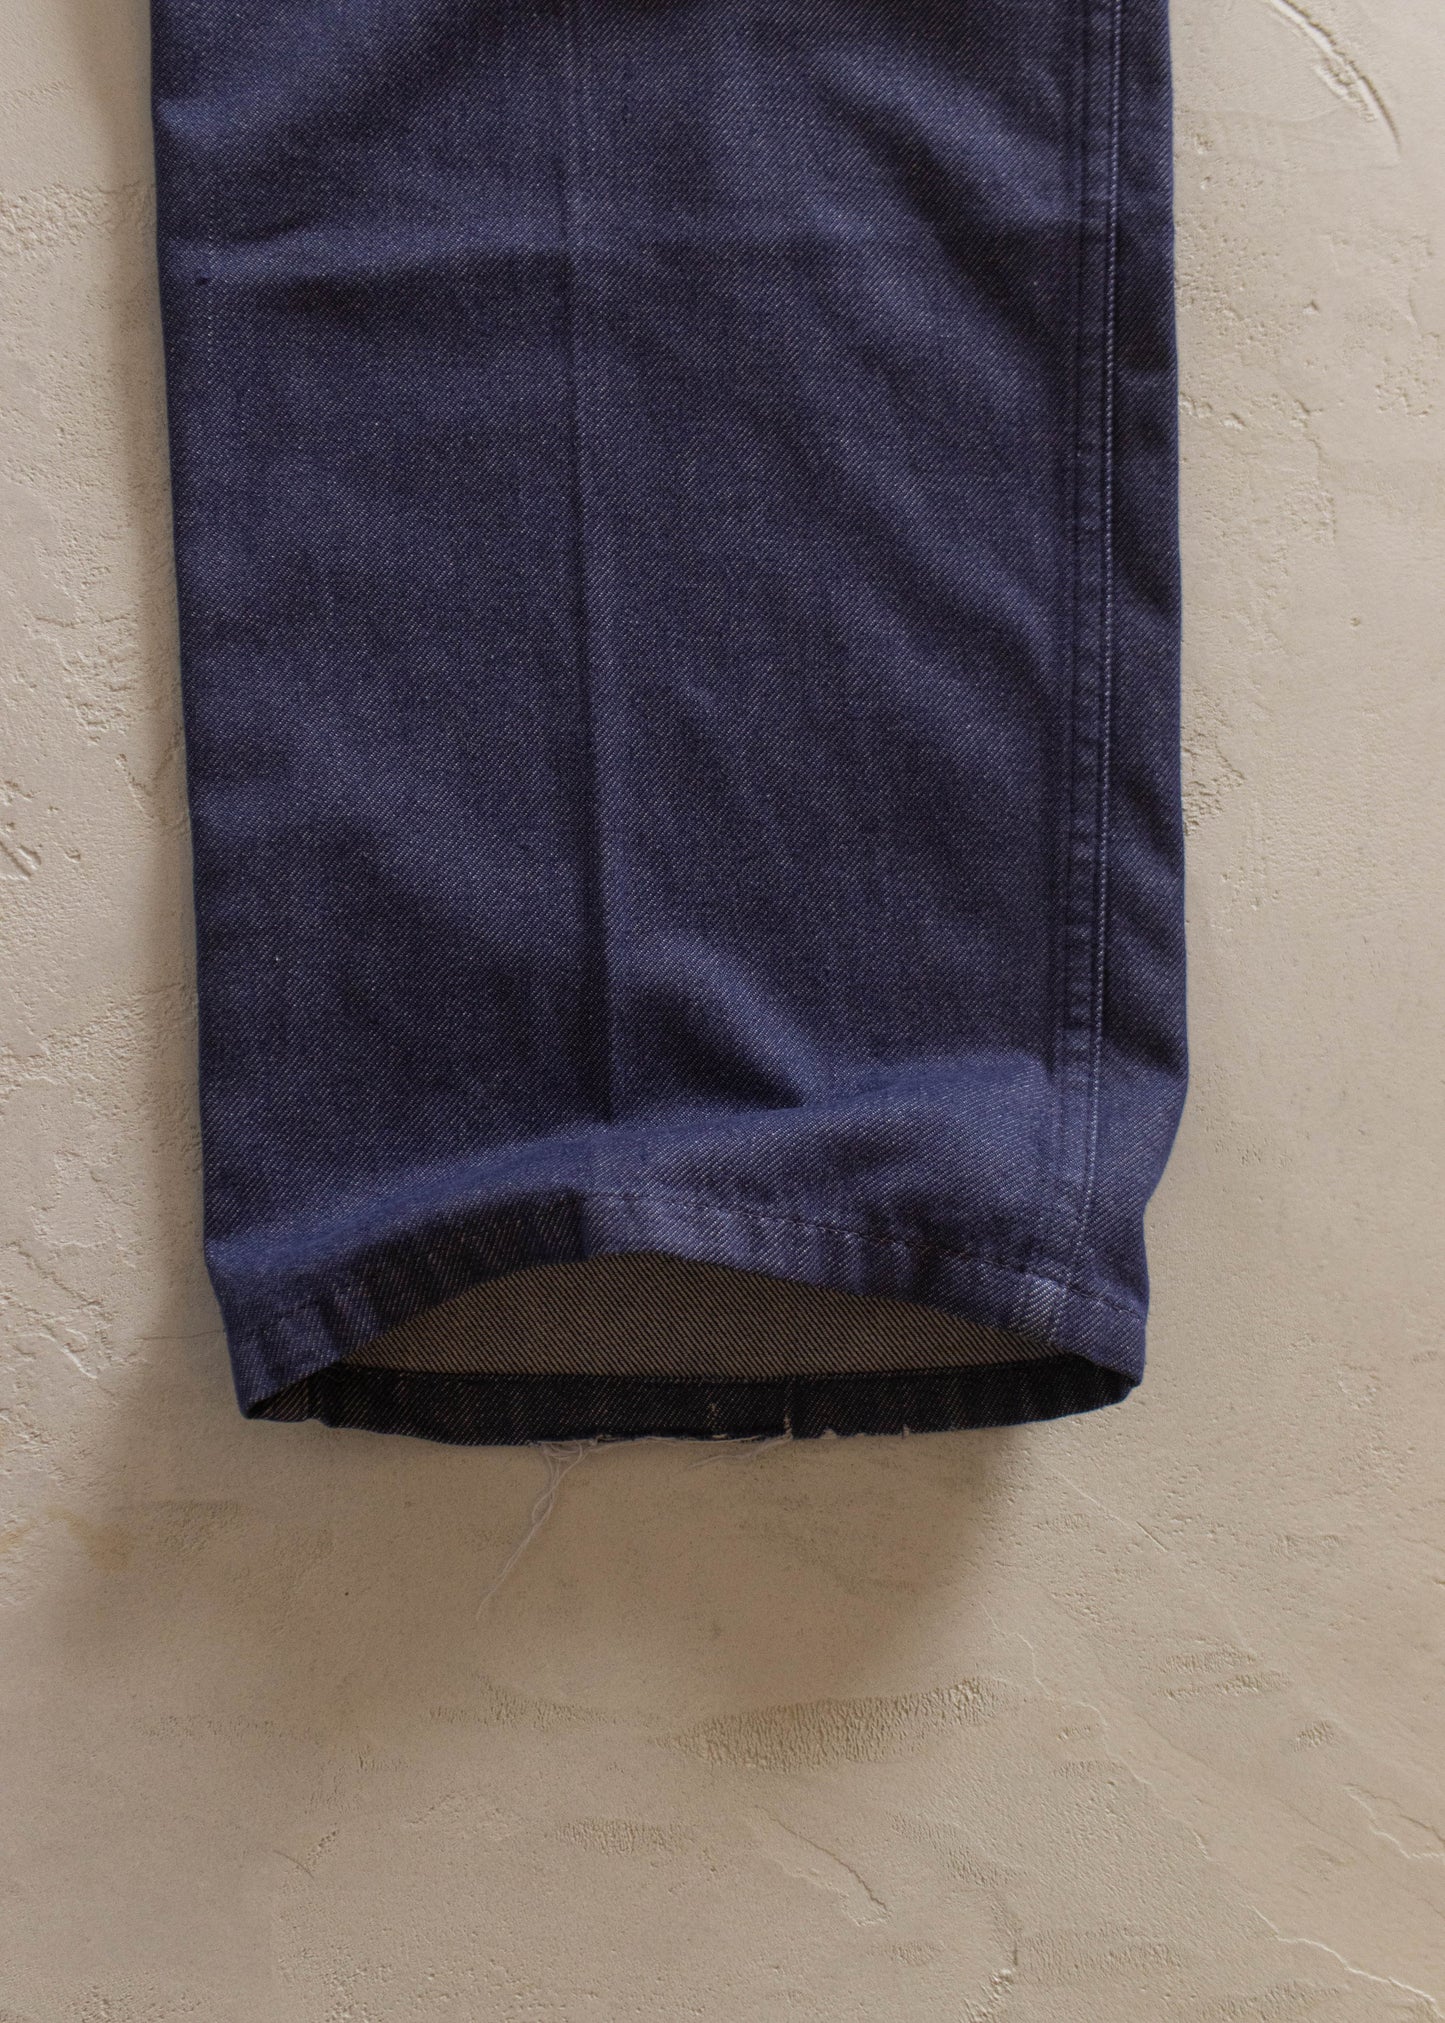 1980s Tergal French Workwear Chore Pants Size Women's 33 Men's 36